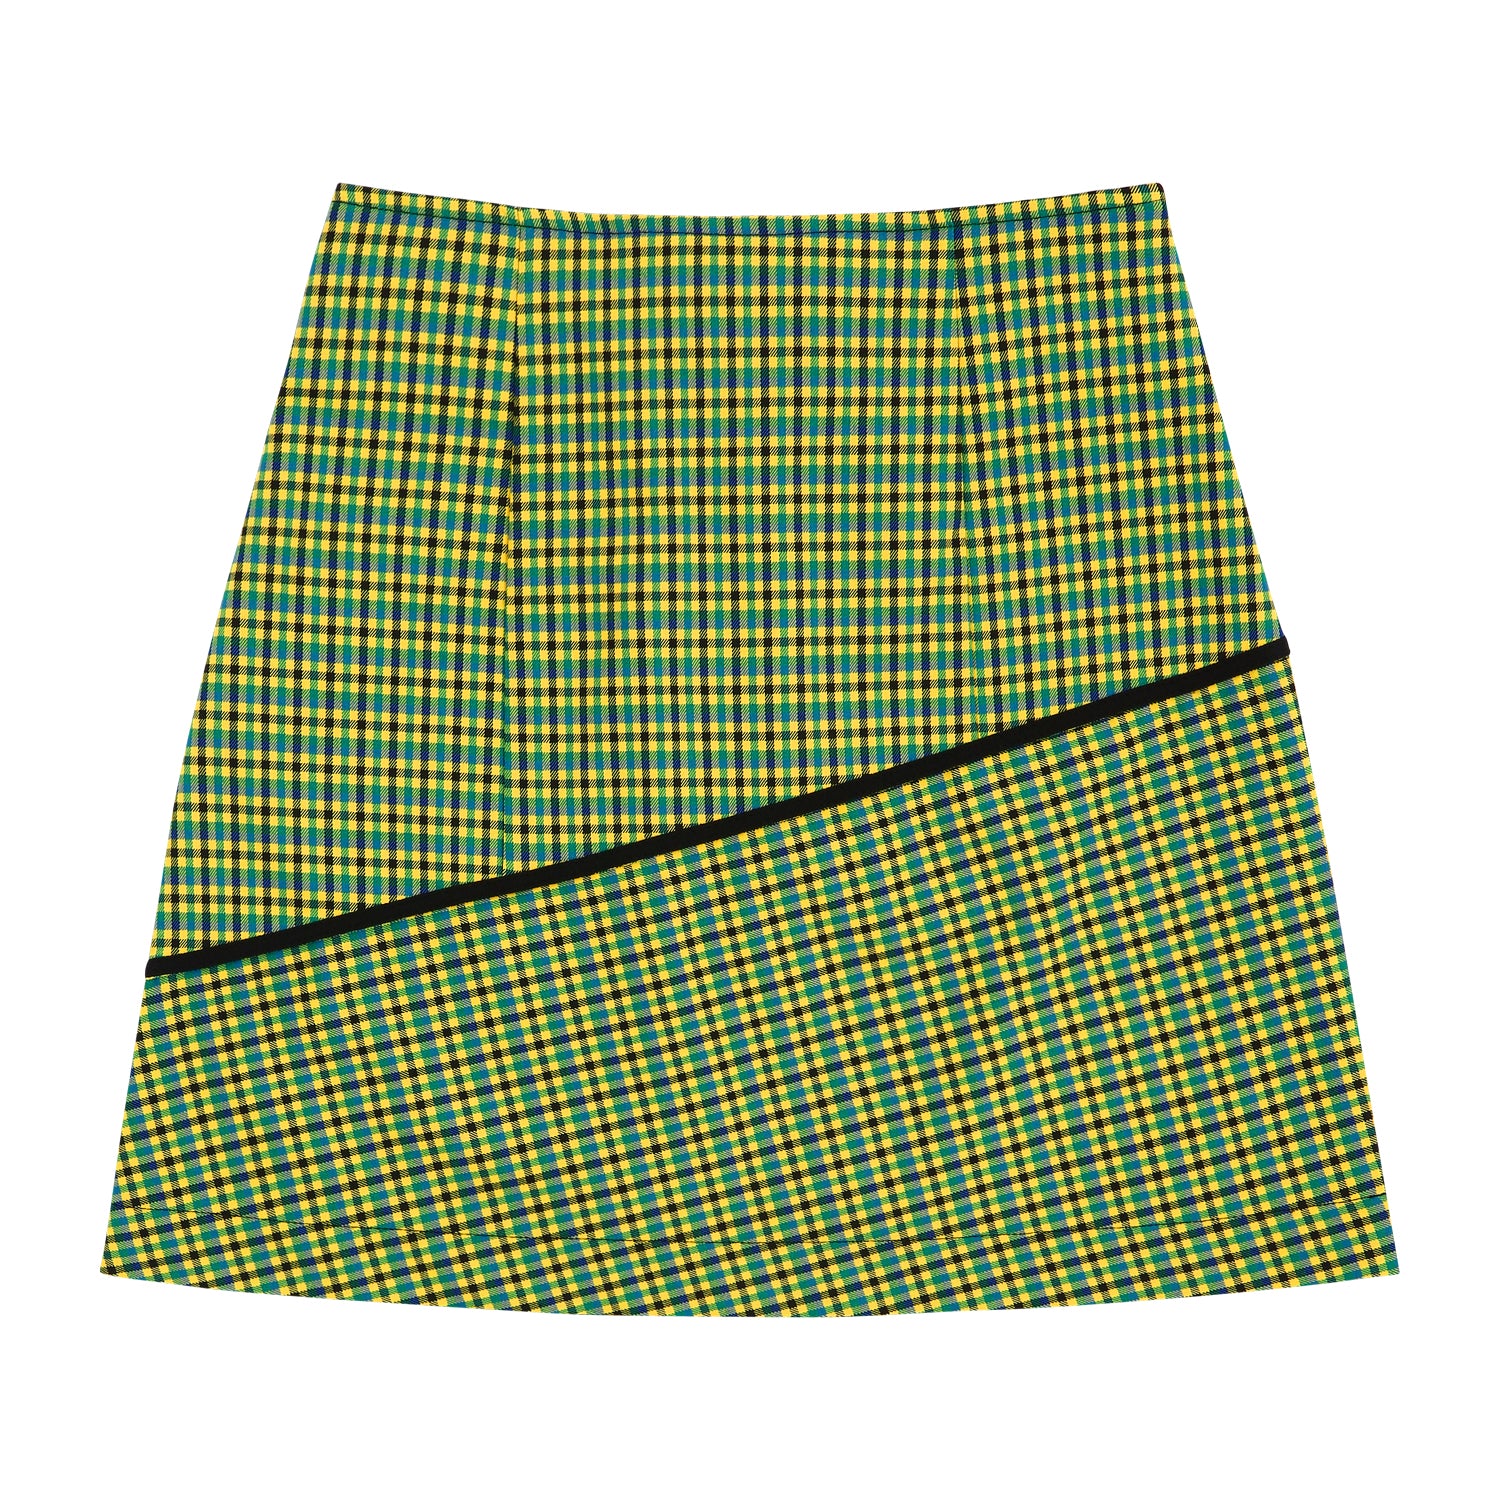 See Skirt